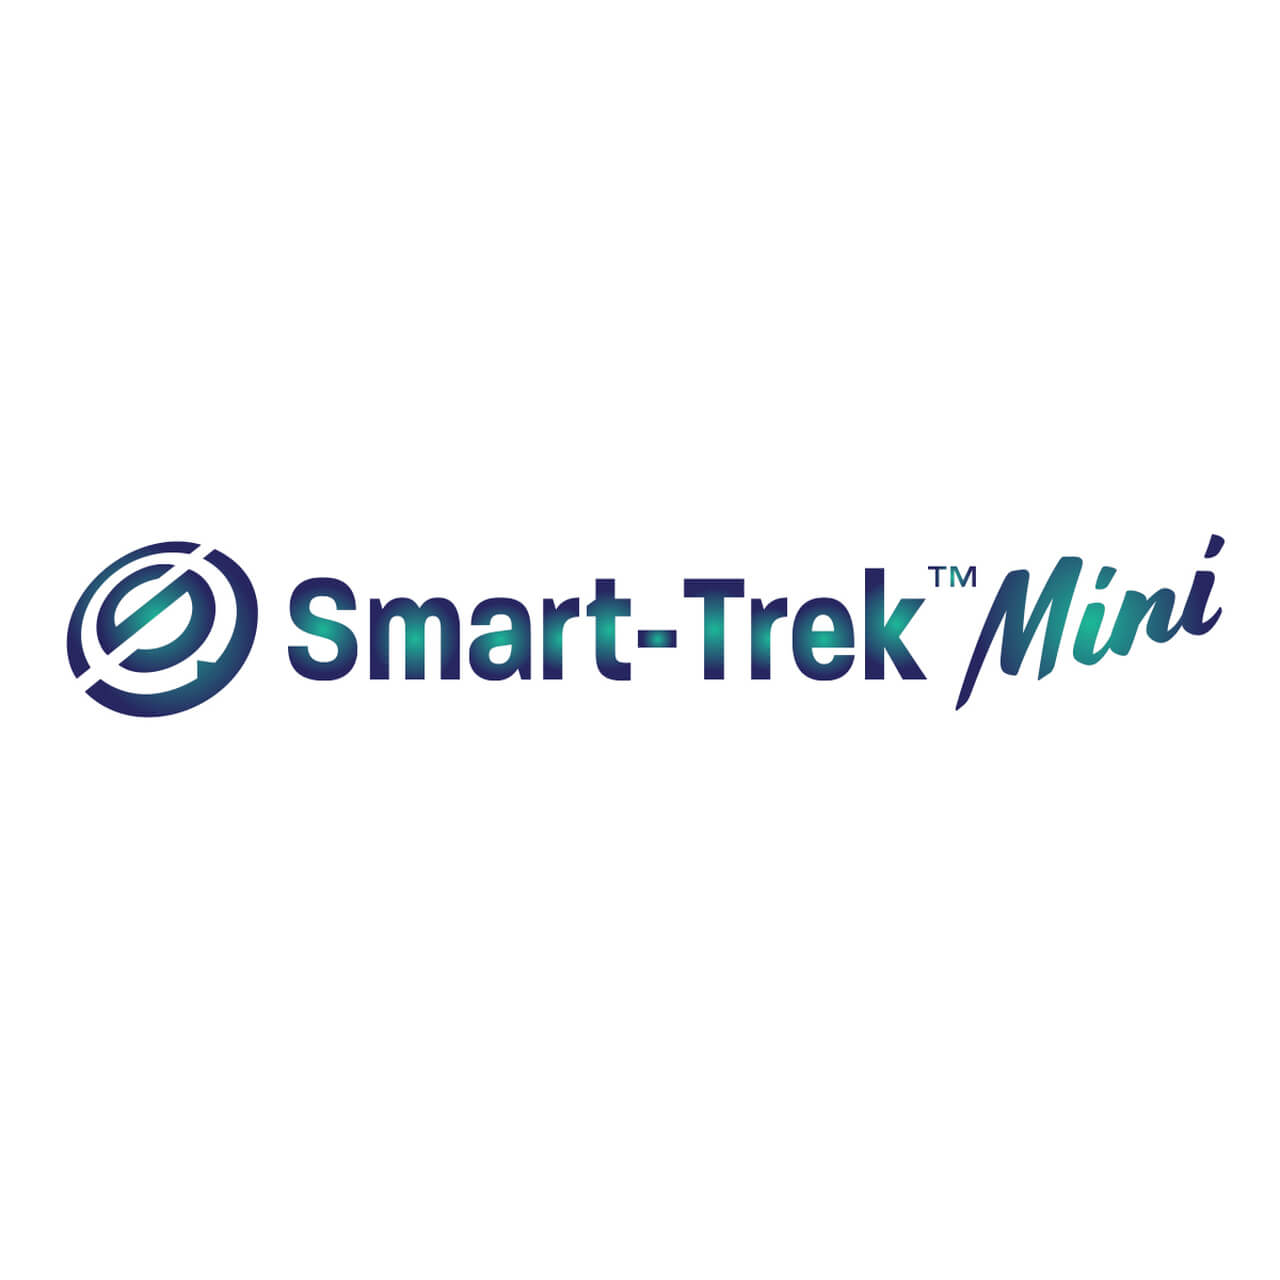 Smart-Trek Mini Headphone with In-Line Volume Control and 3.5mm TRS Plug - Learning Headphones